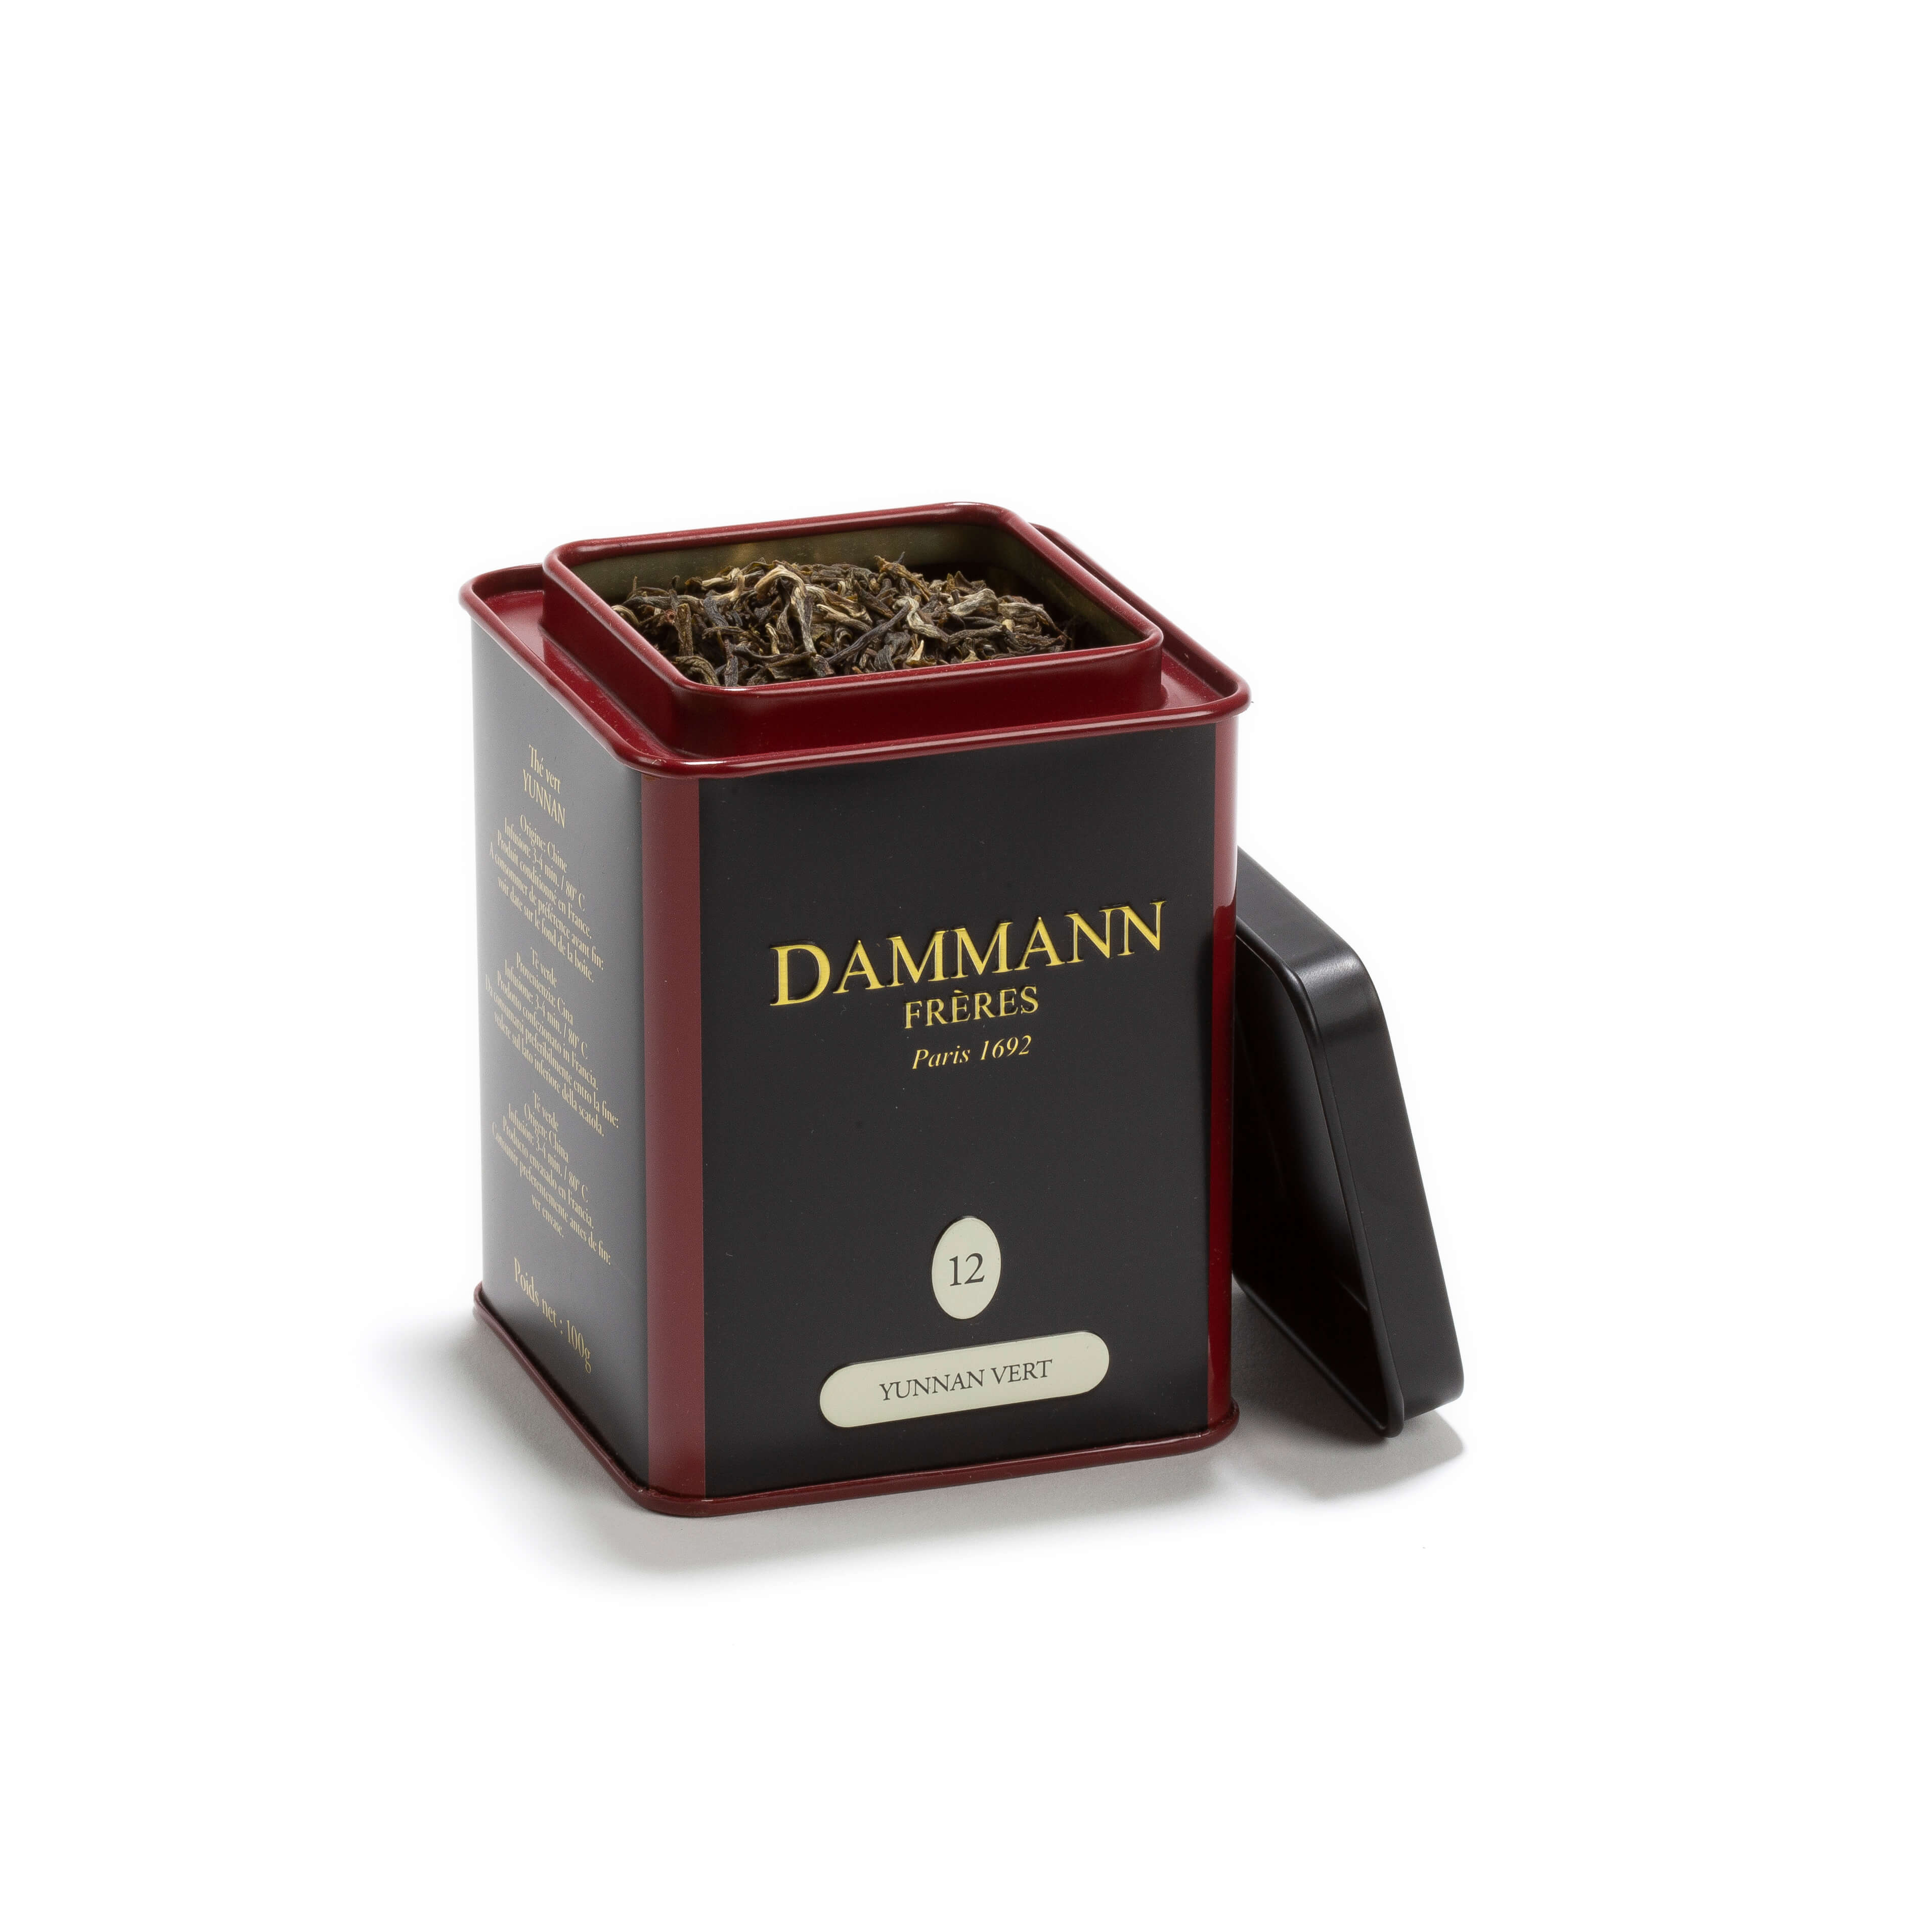 Dammann Loose Tea Yunnan Vert, Green Flavored Tea, 18-20-2004